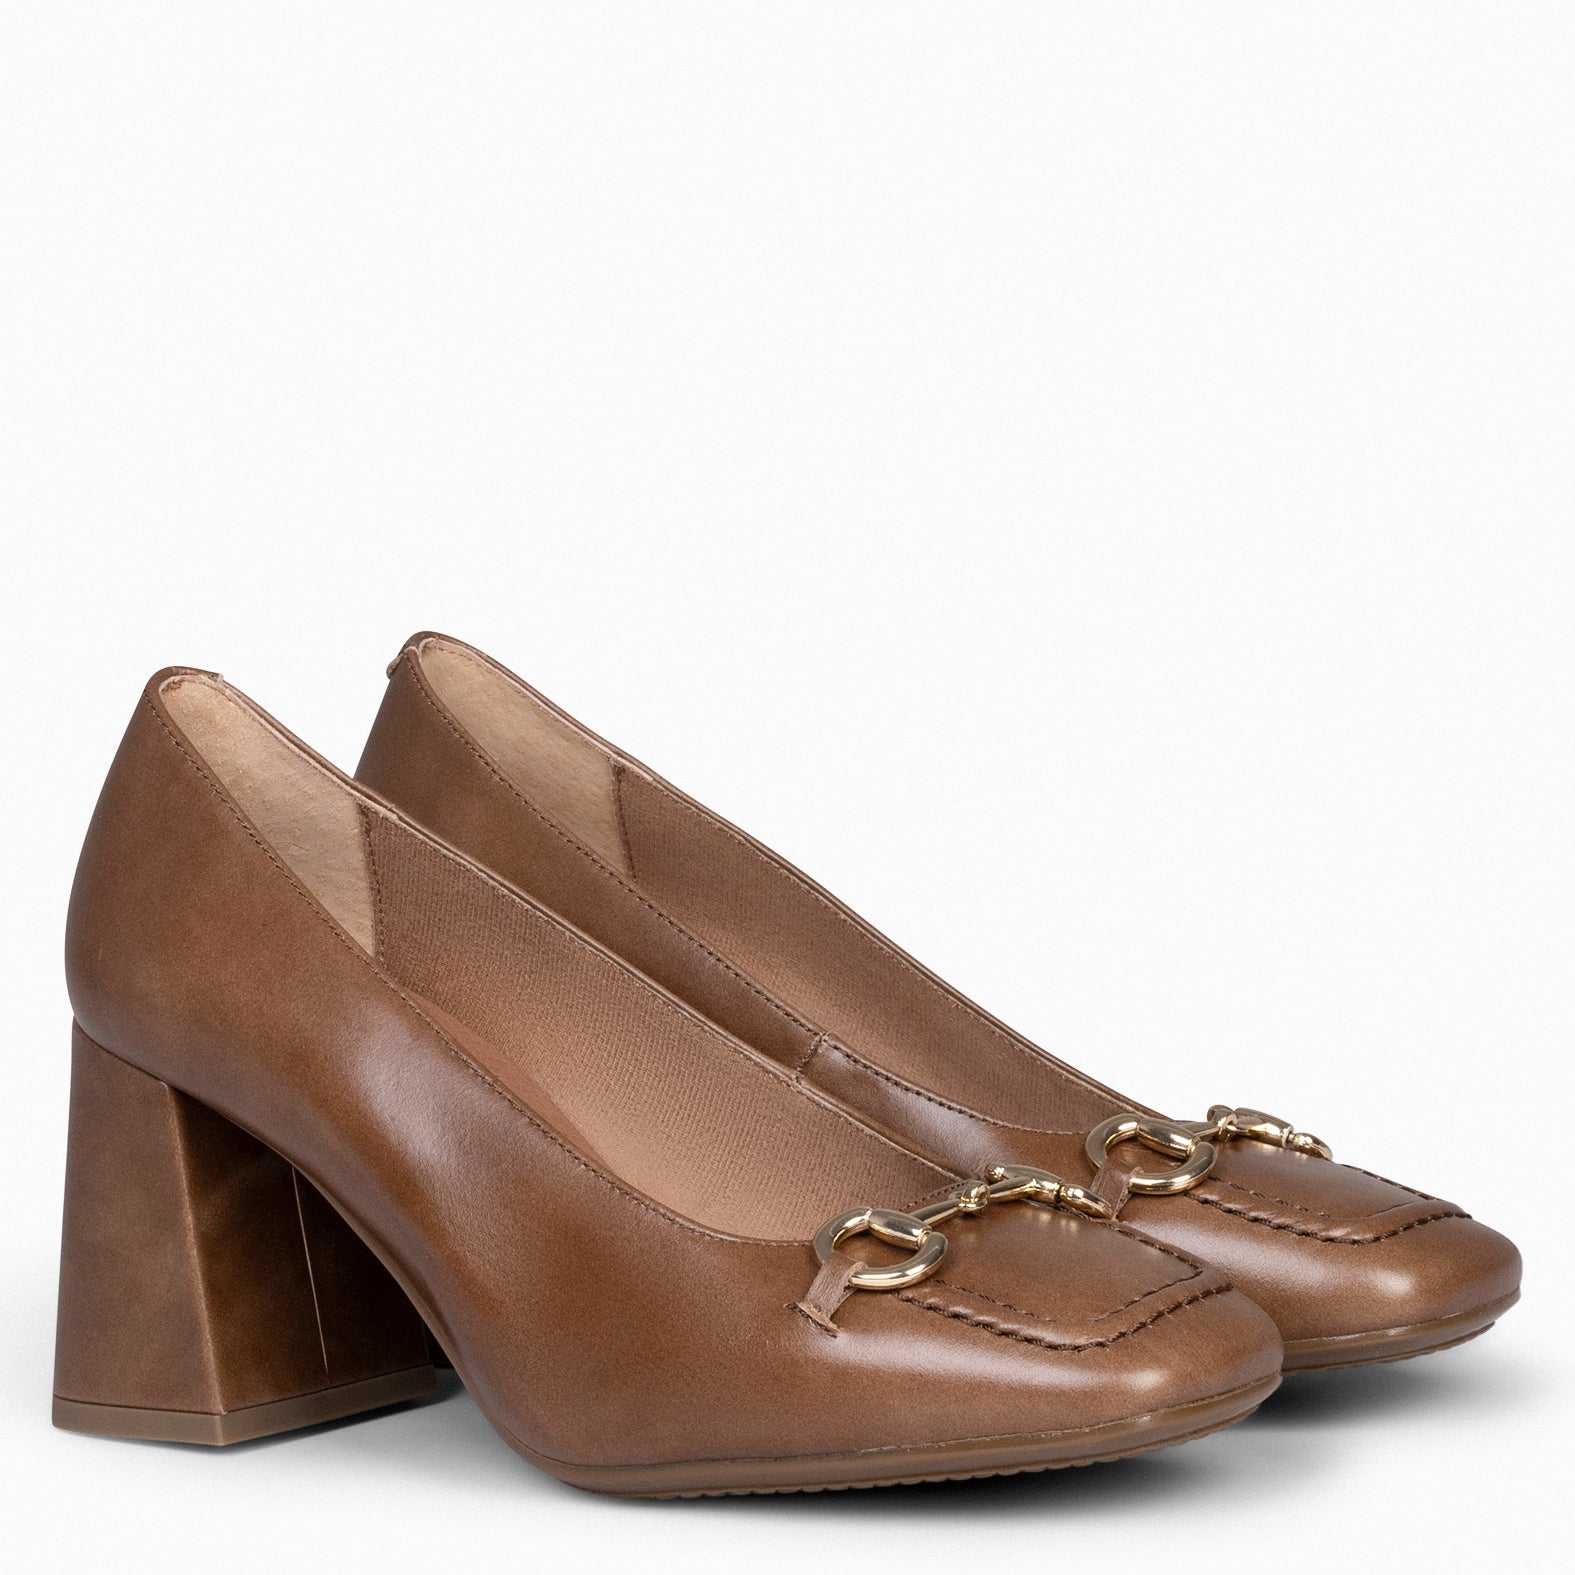 MIA – TAUPE Block heeled shoes